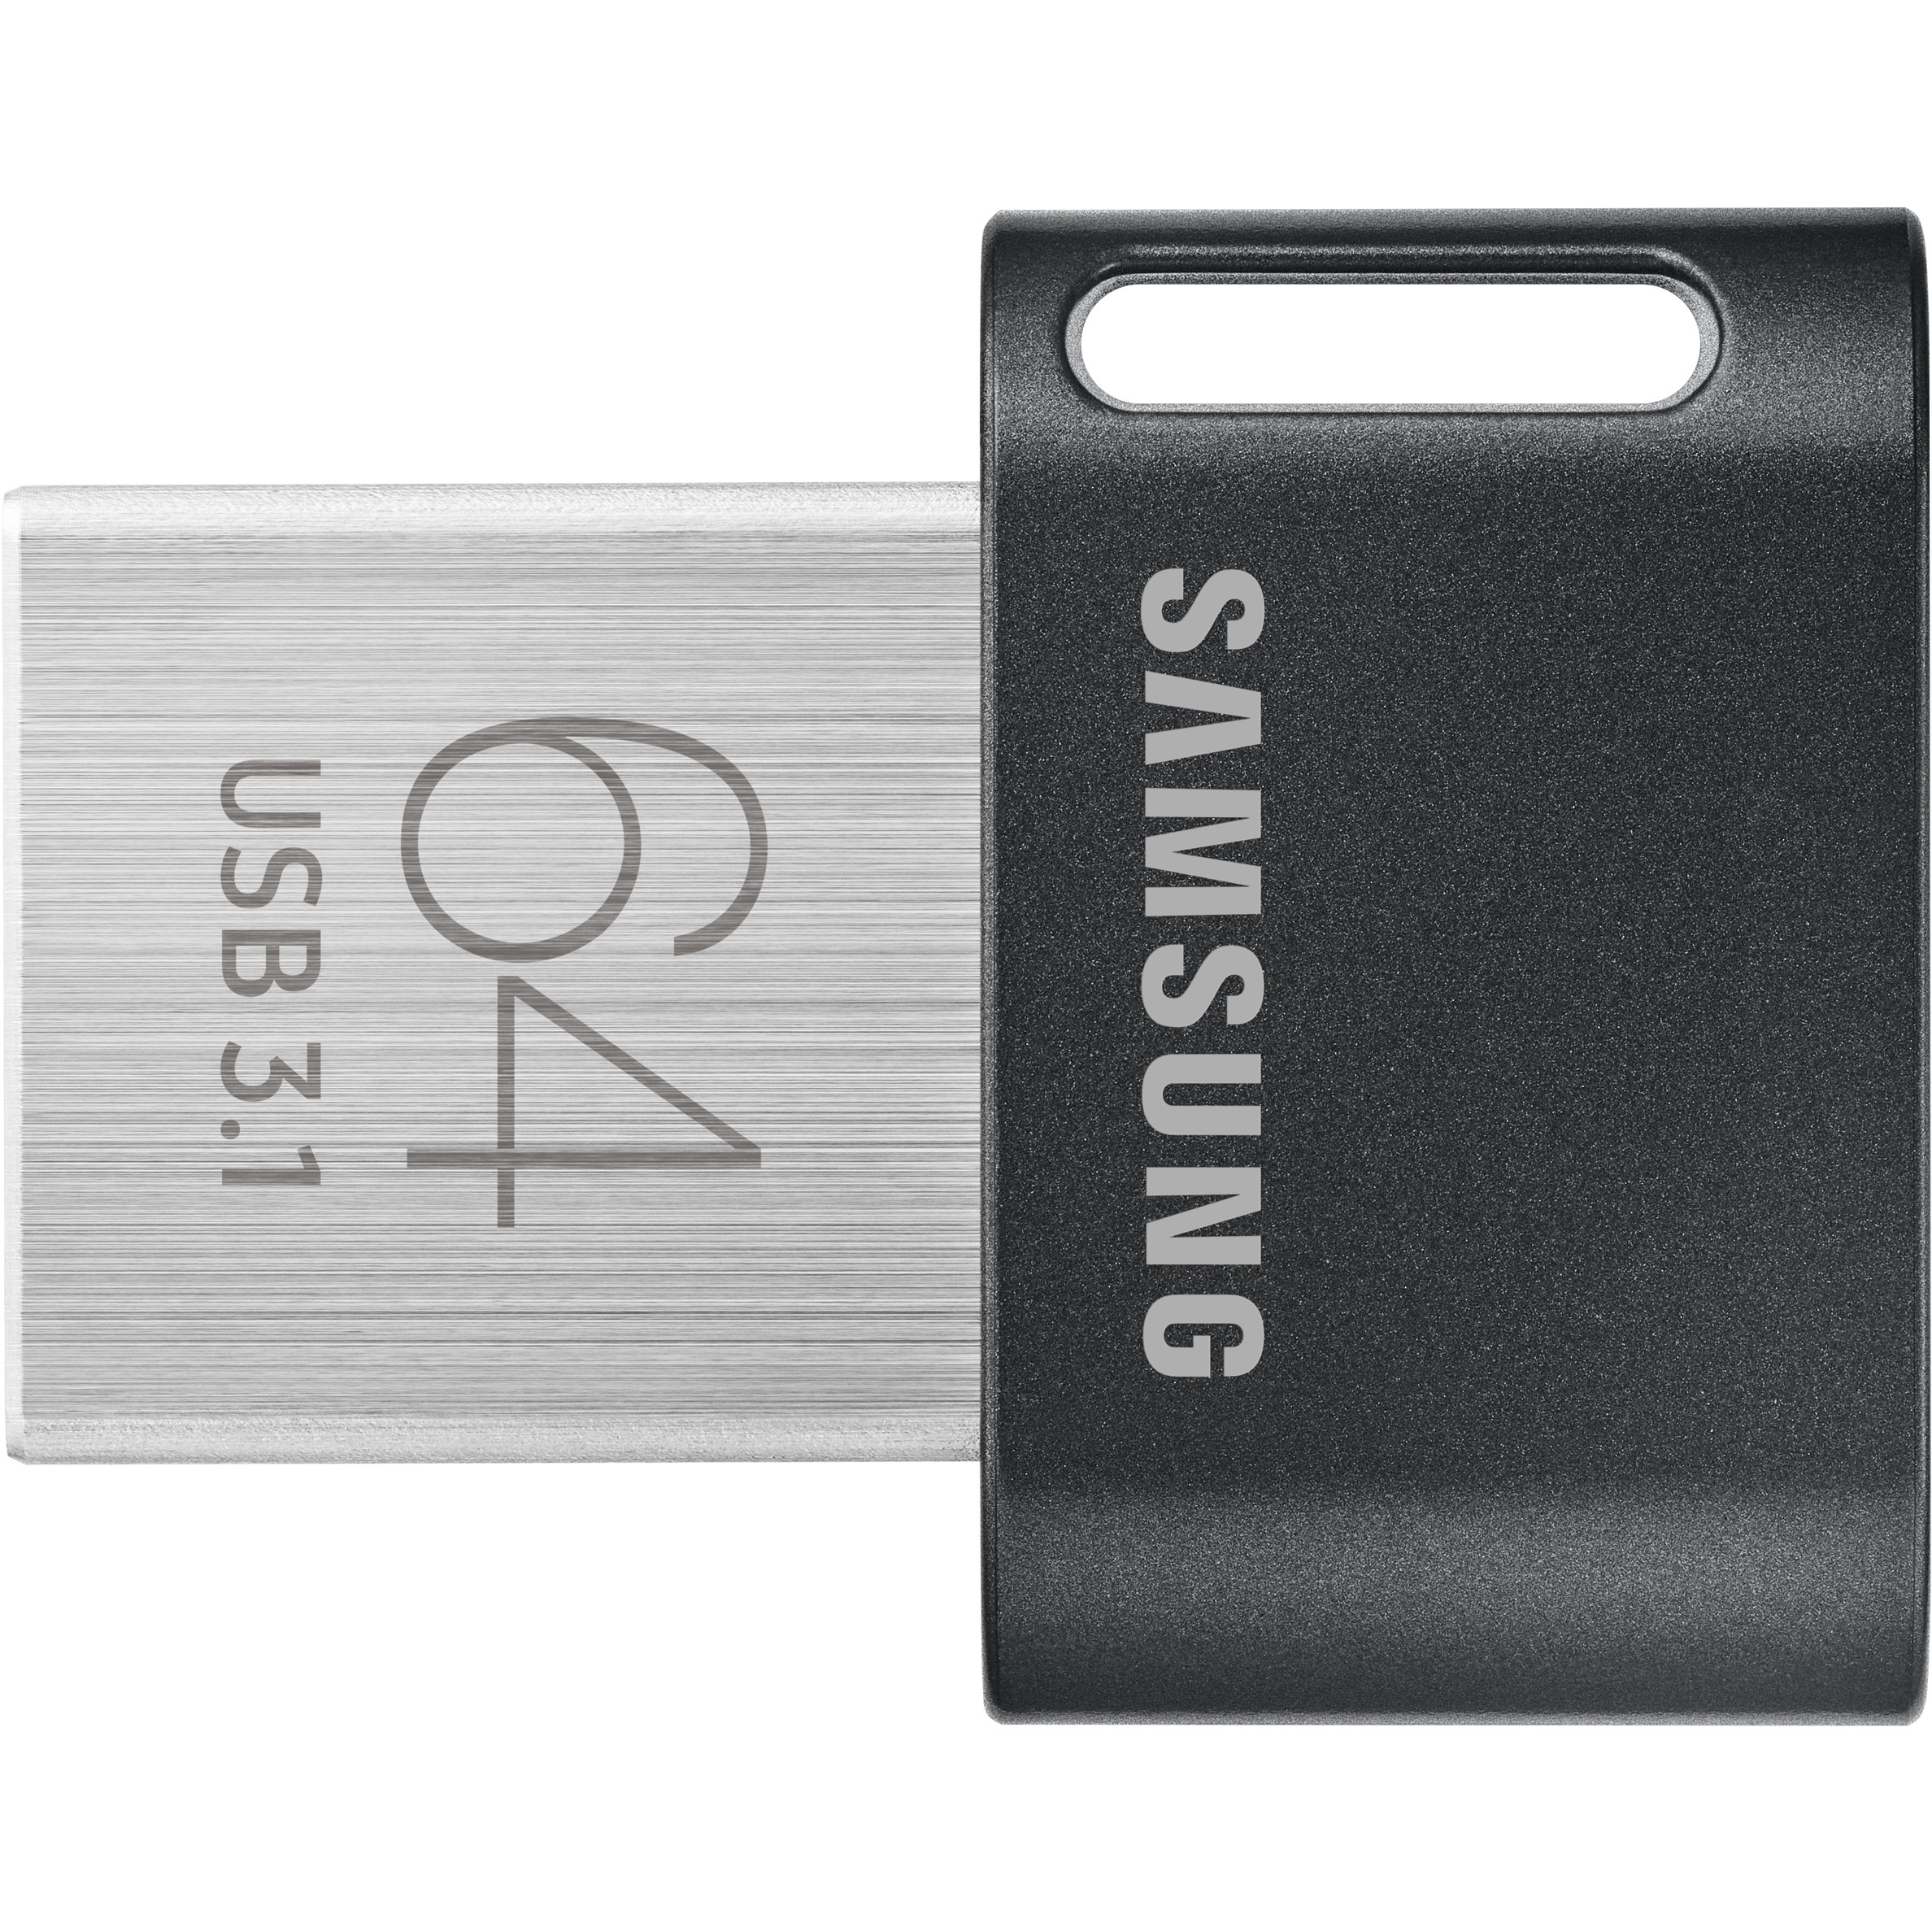 SAMSUNG MUF-64AB/APC, USB-Stick, Samsung MUF-64AB USB  (BILD1)